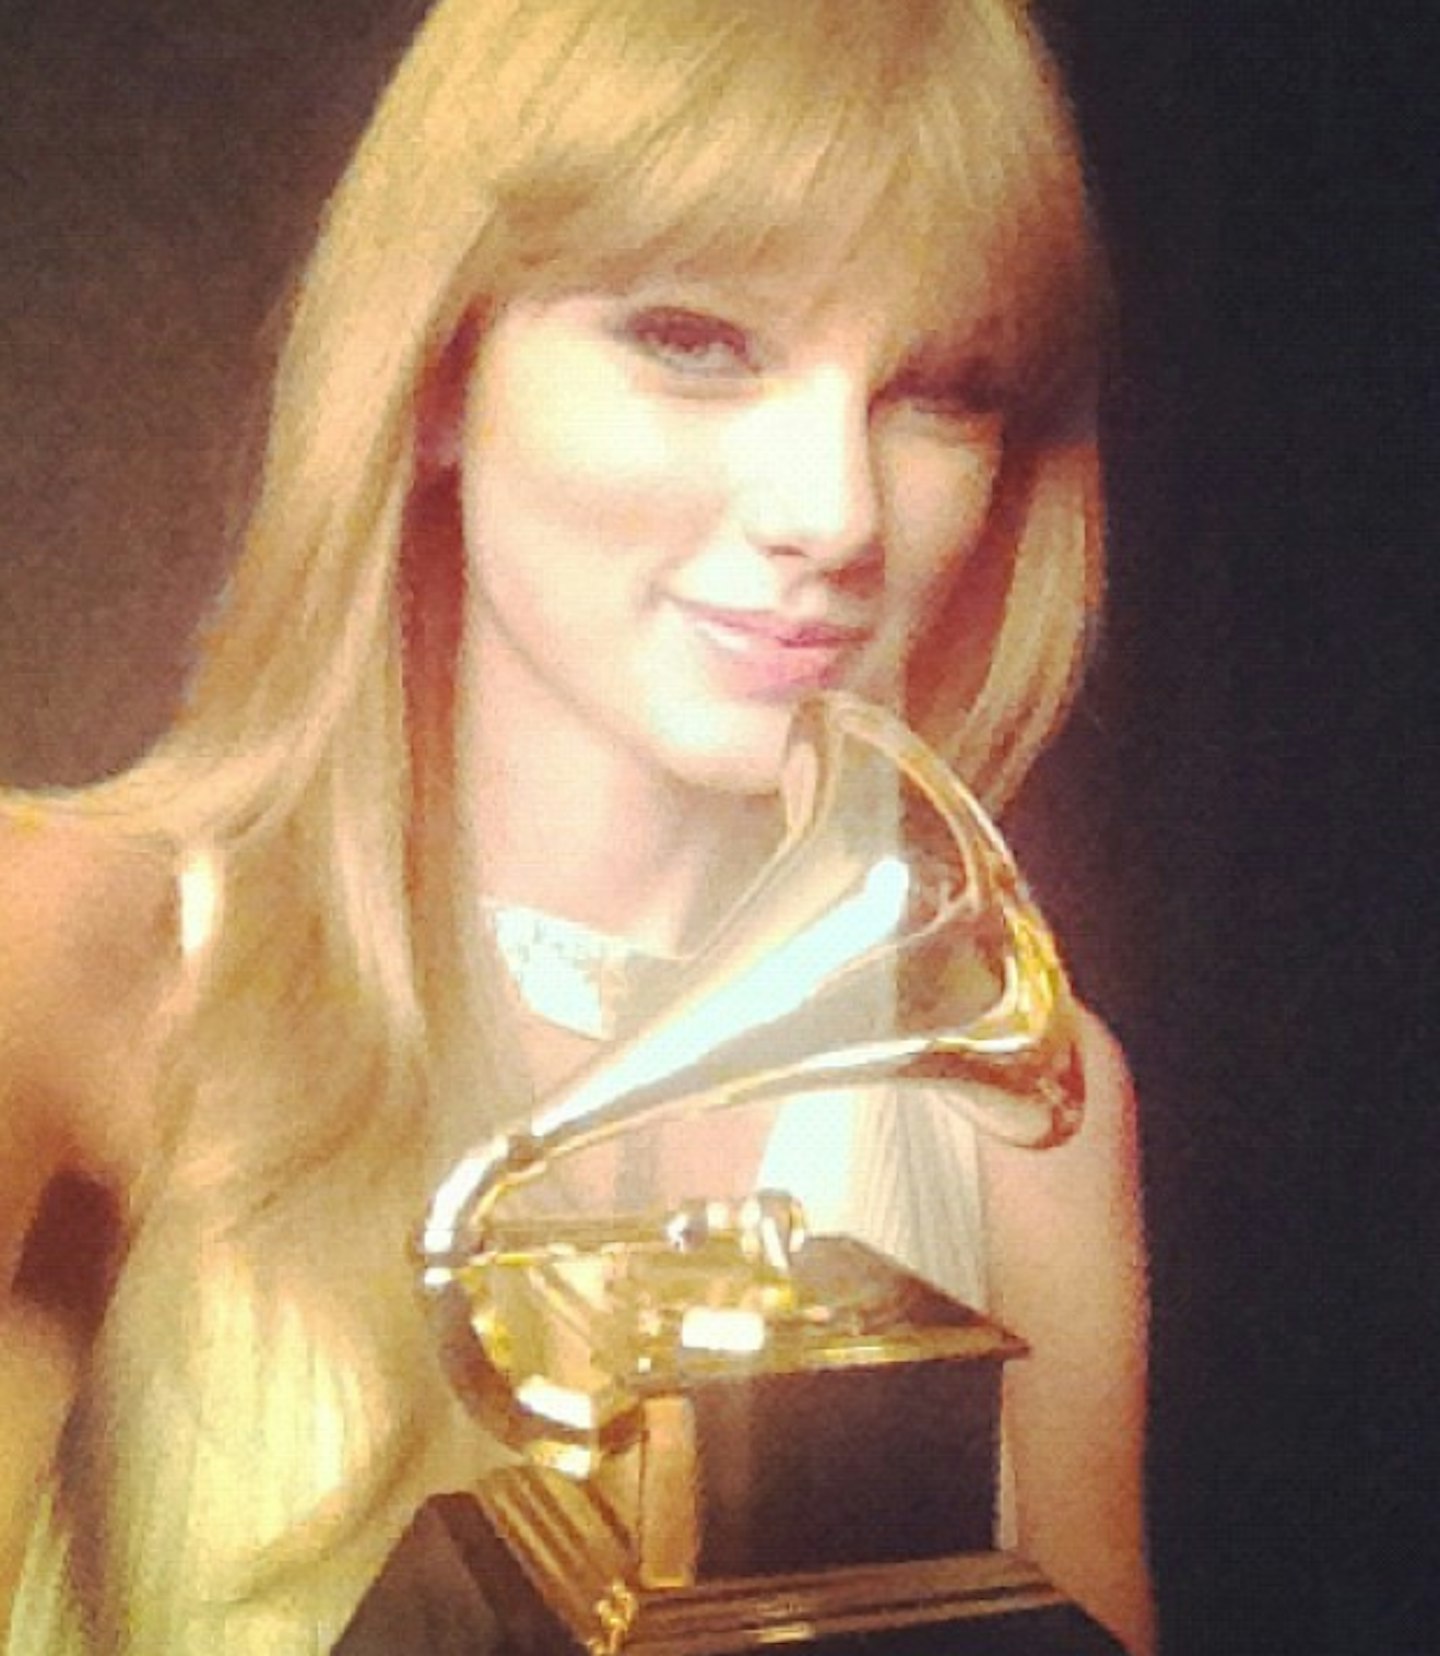 She wins Grammys...